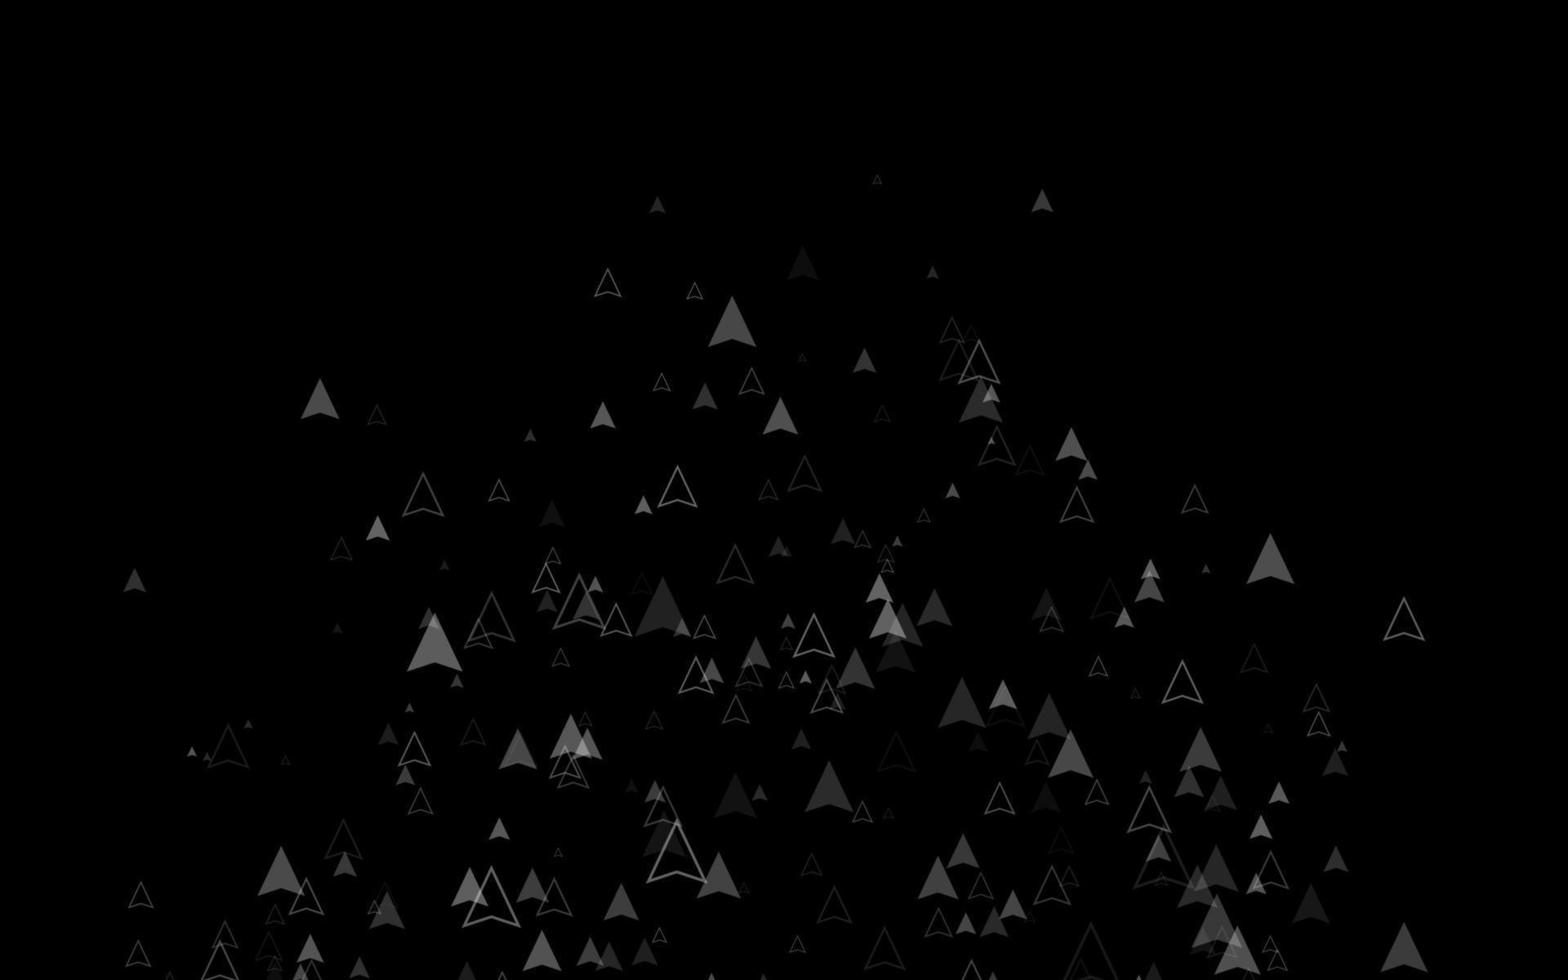 dark background, random minimalist abstract illustration vector for logo, card, banner, web and printing.